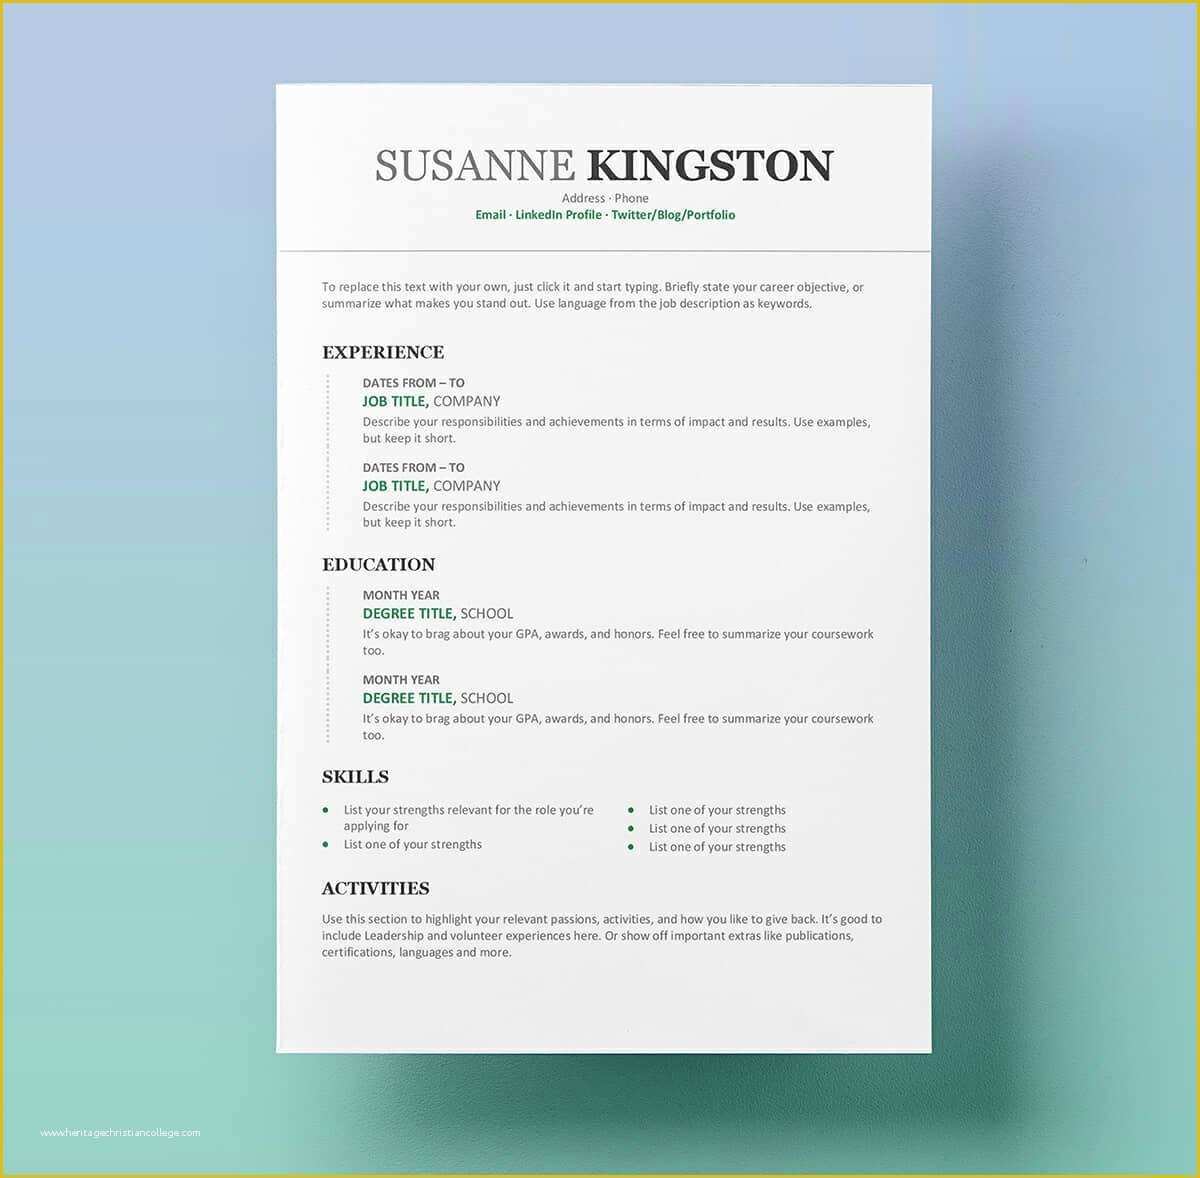 Free Online Resume Templates Printable Of Resume Templates for Word Free 15 Examples for Download